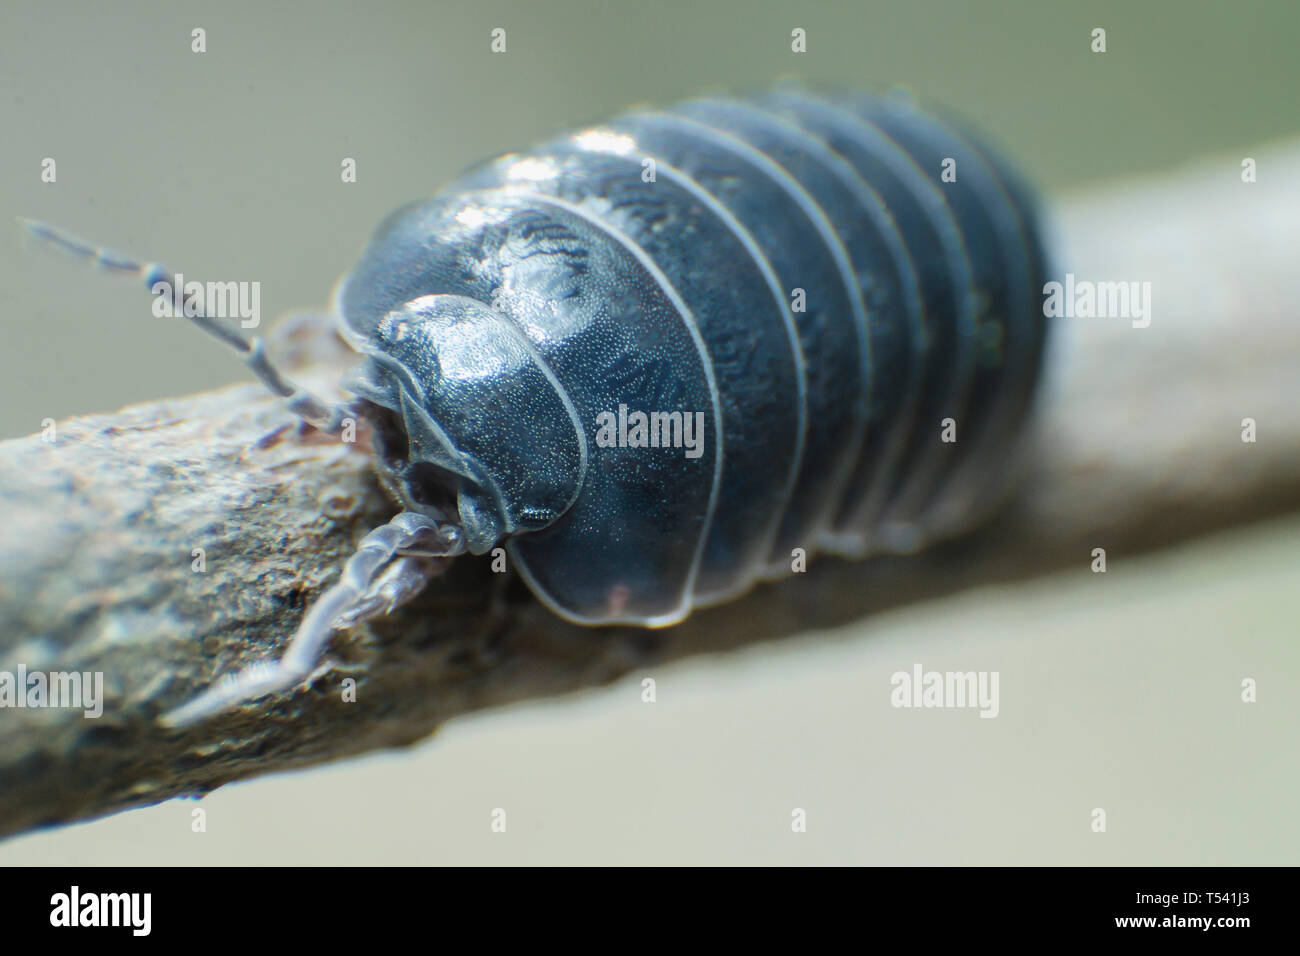 Bug pillola Armadillidium vulgare strisciare sul ramo sfondo grigio vista frontale Foto Stock